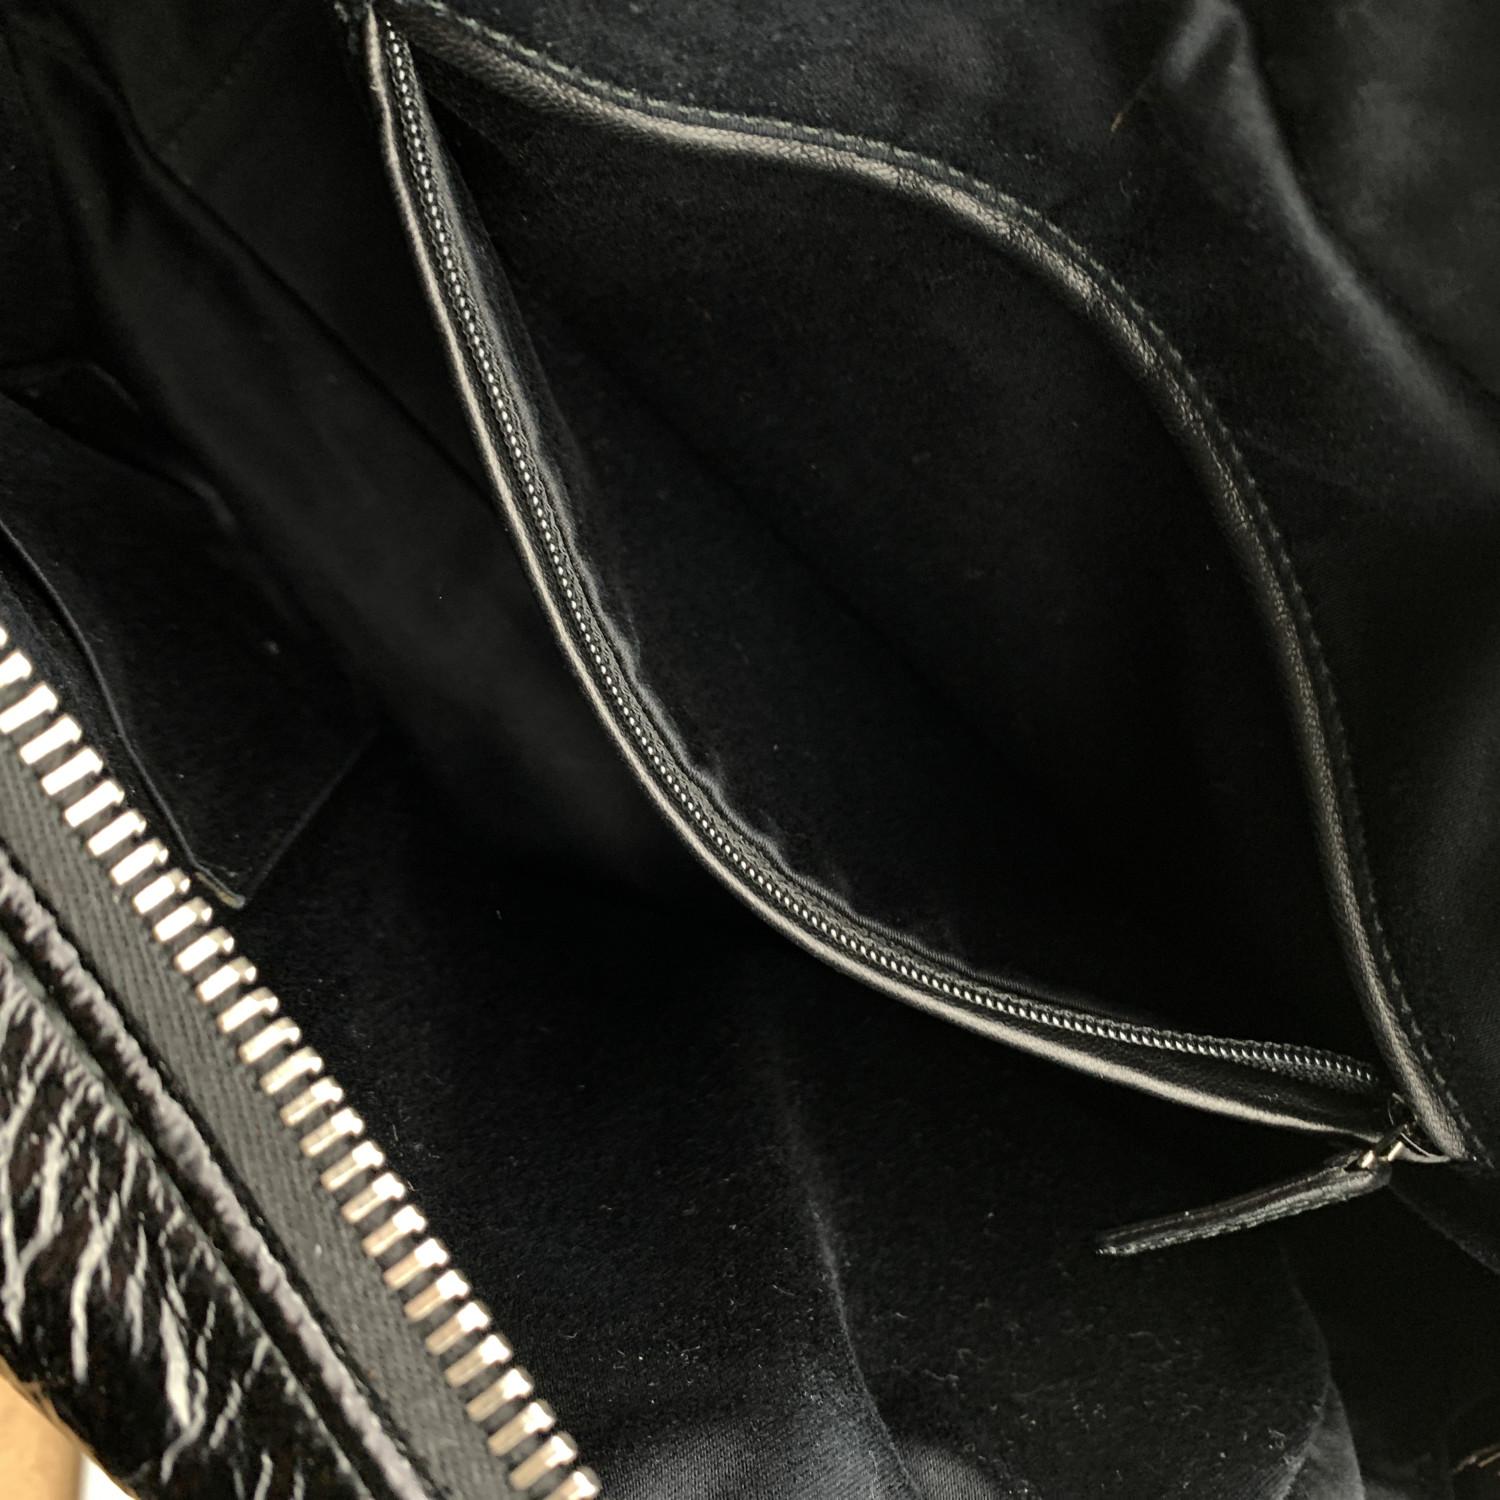 Yves Saint Laurent Black Patent Leather Obi Bow Satchel Bowler Bag 2